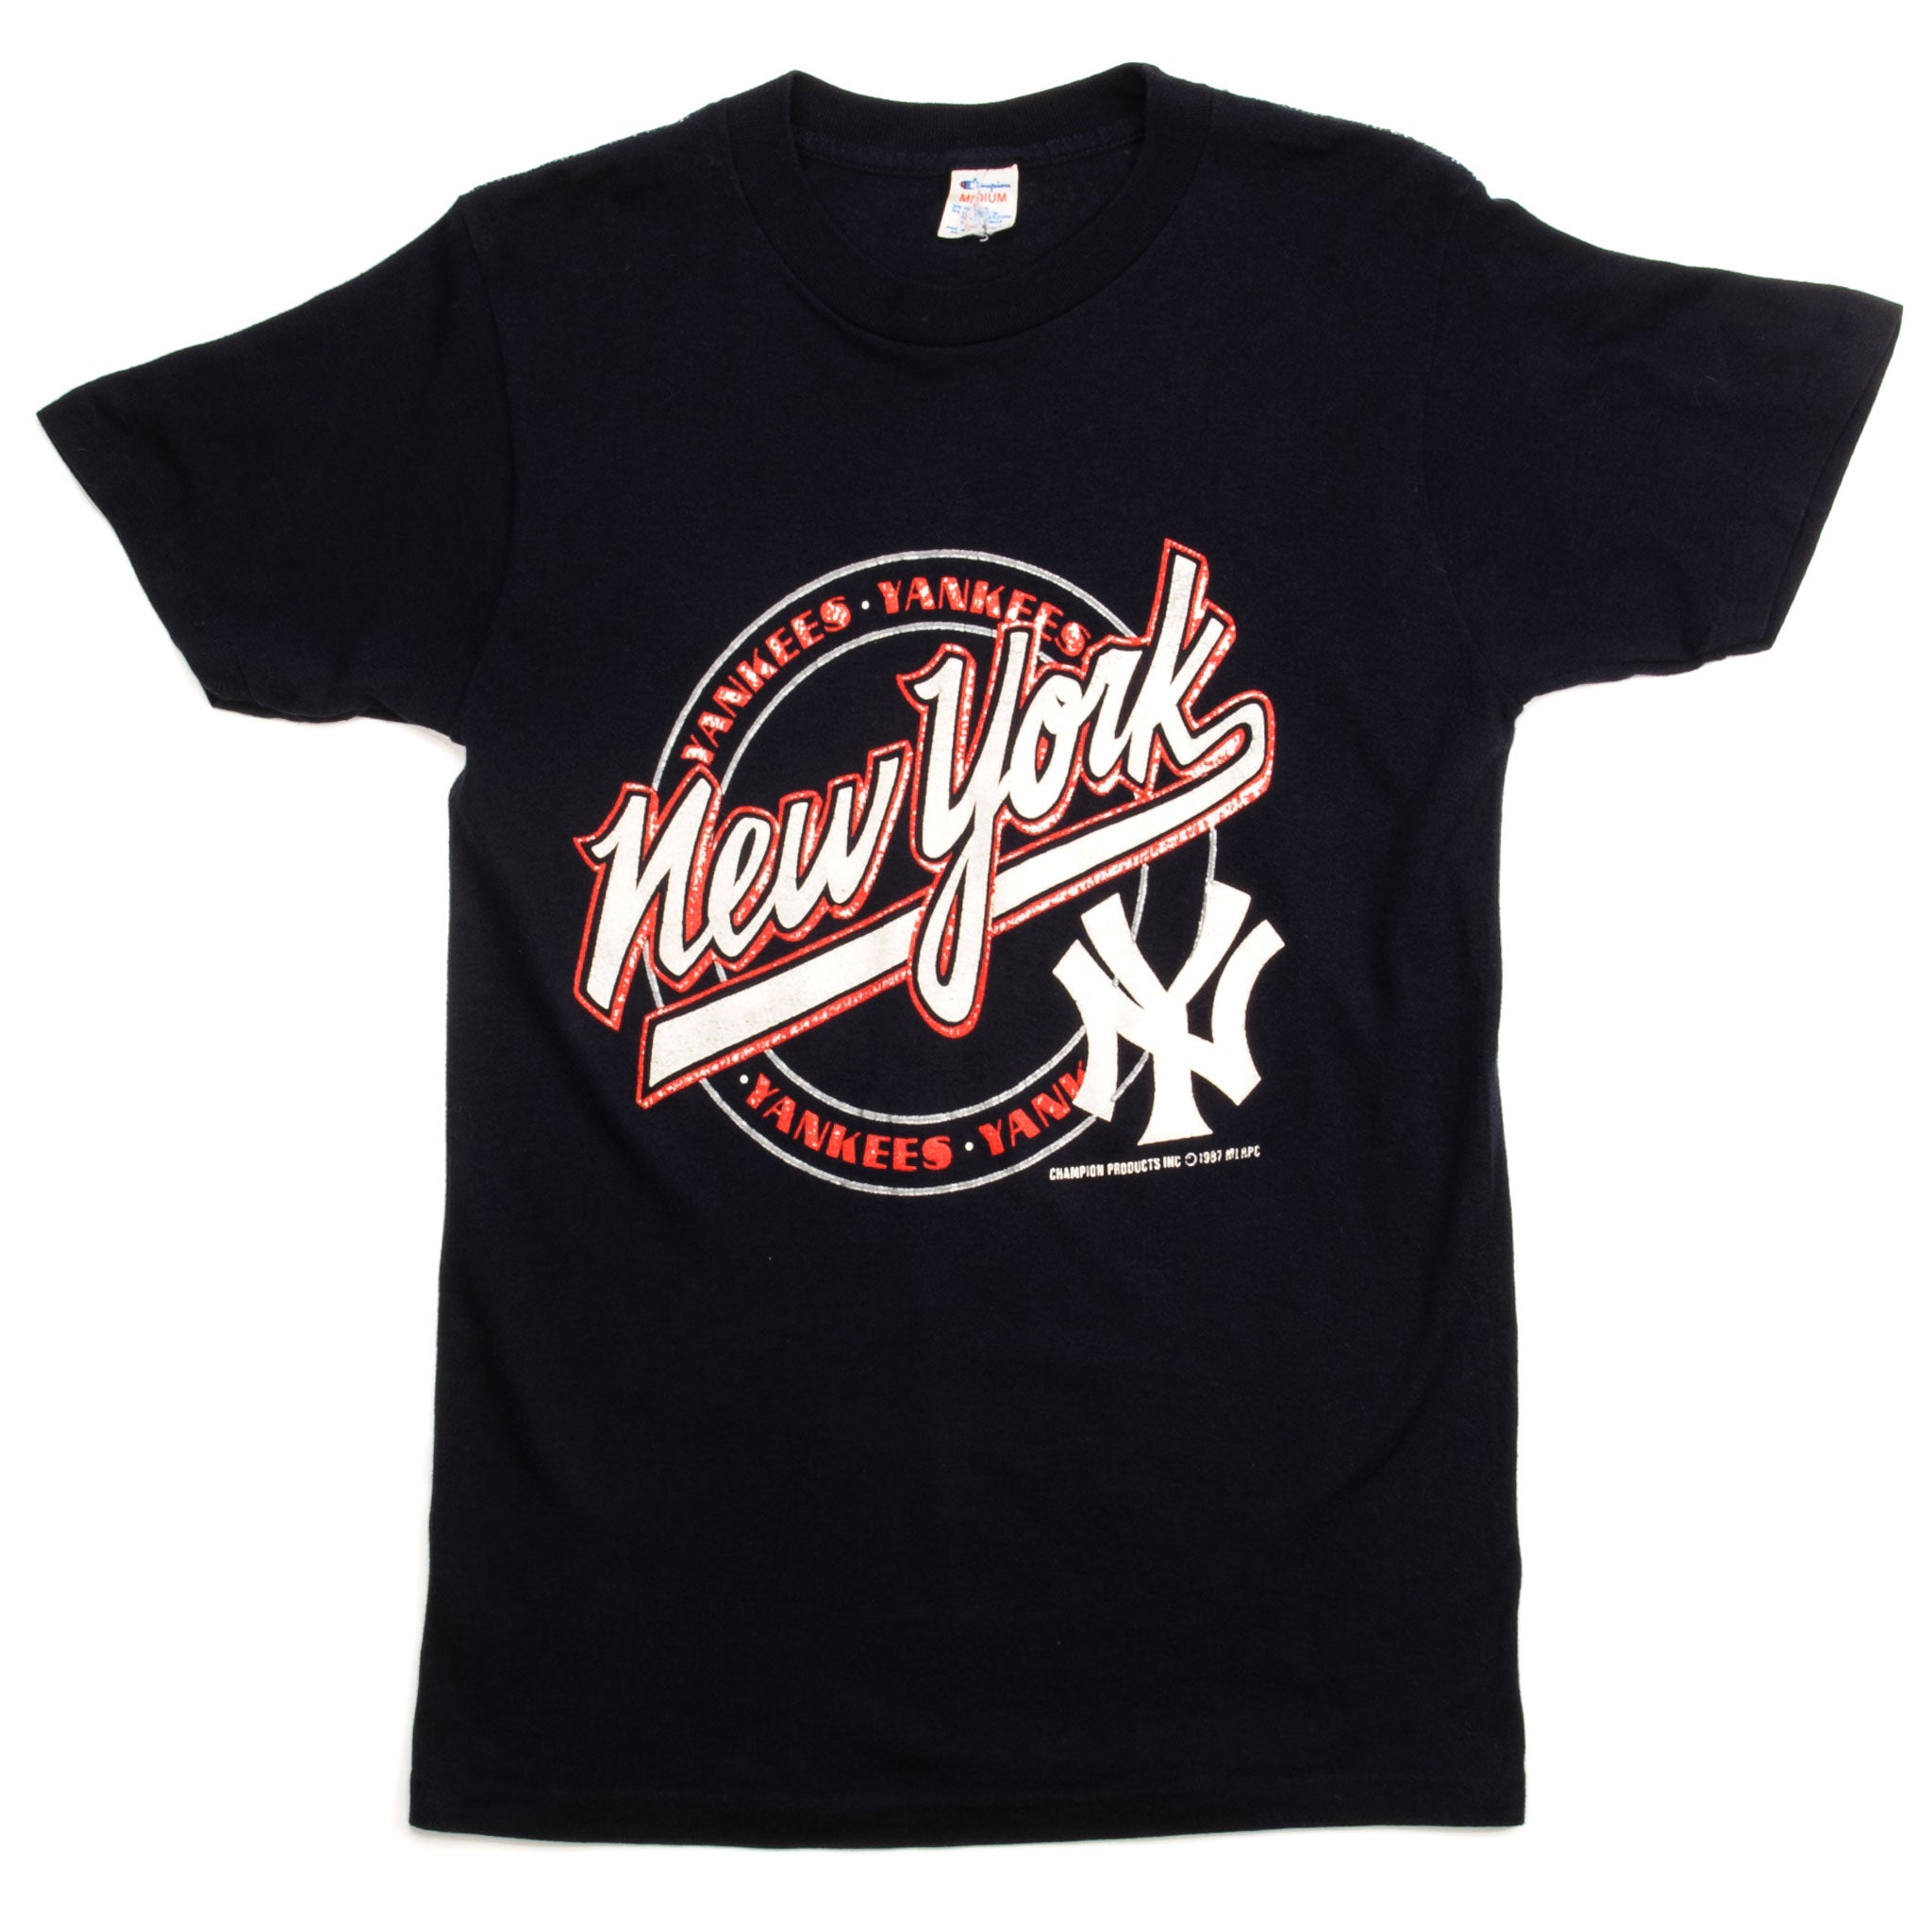 New York Yankees T-Shirts, Yankees Tees, Shirts